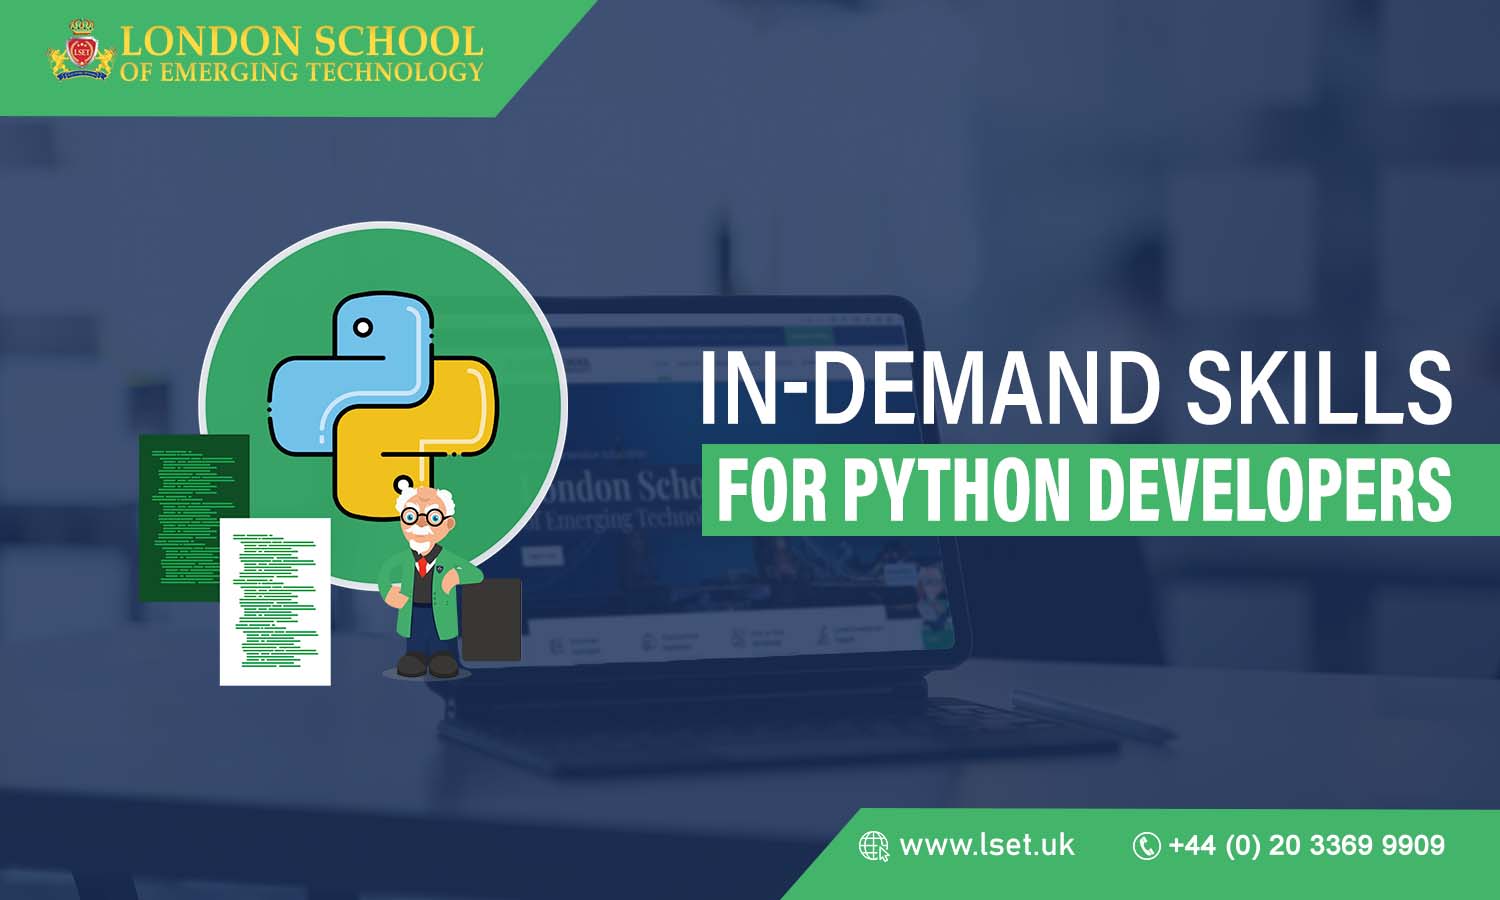 In-demand skills for Python Developers